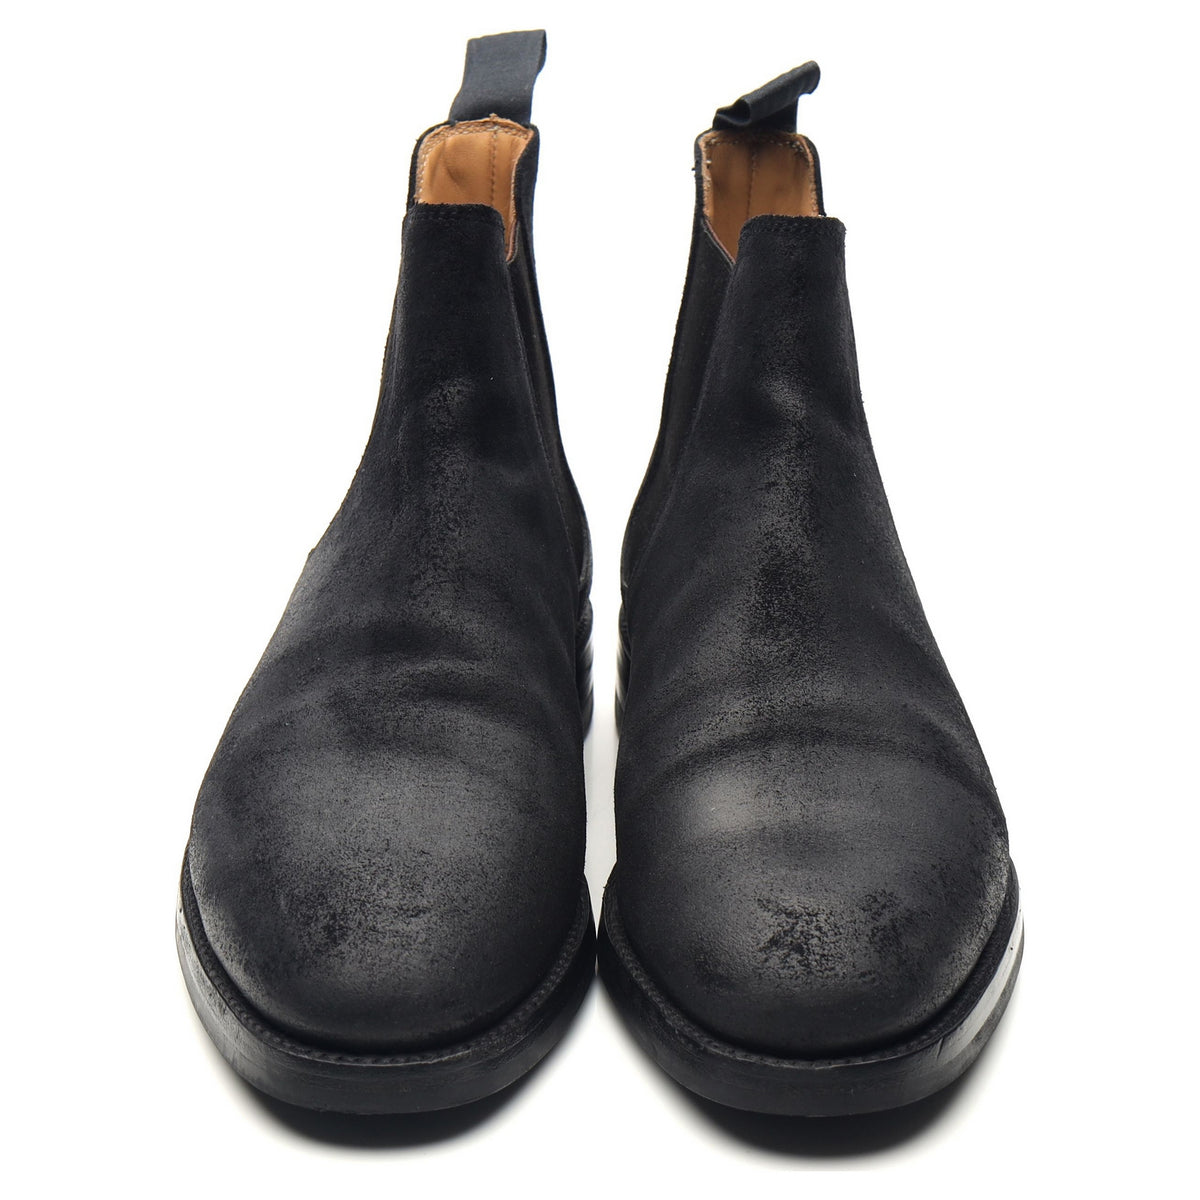 Chelsea Black Rough-Out Suede Chelsea Boots UK 7 E - Abbot's Shoes